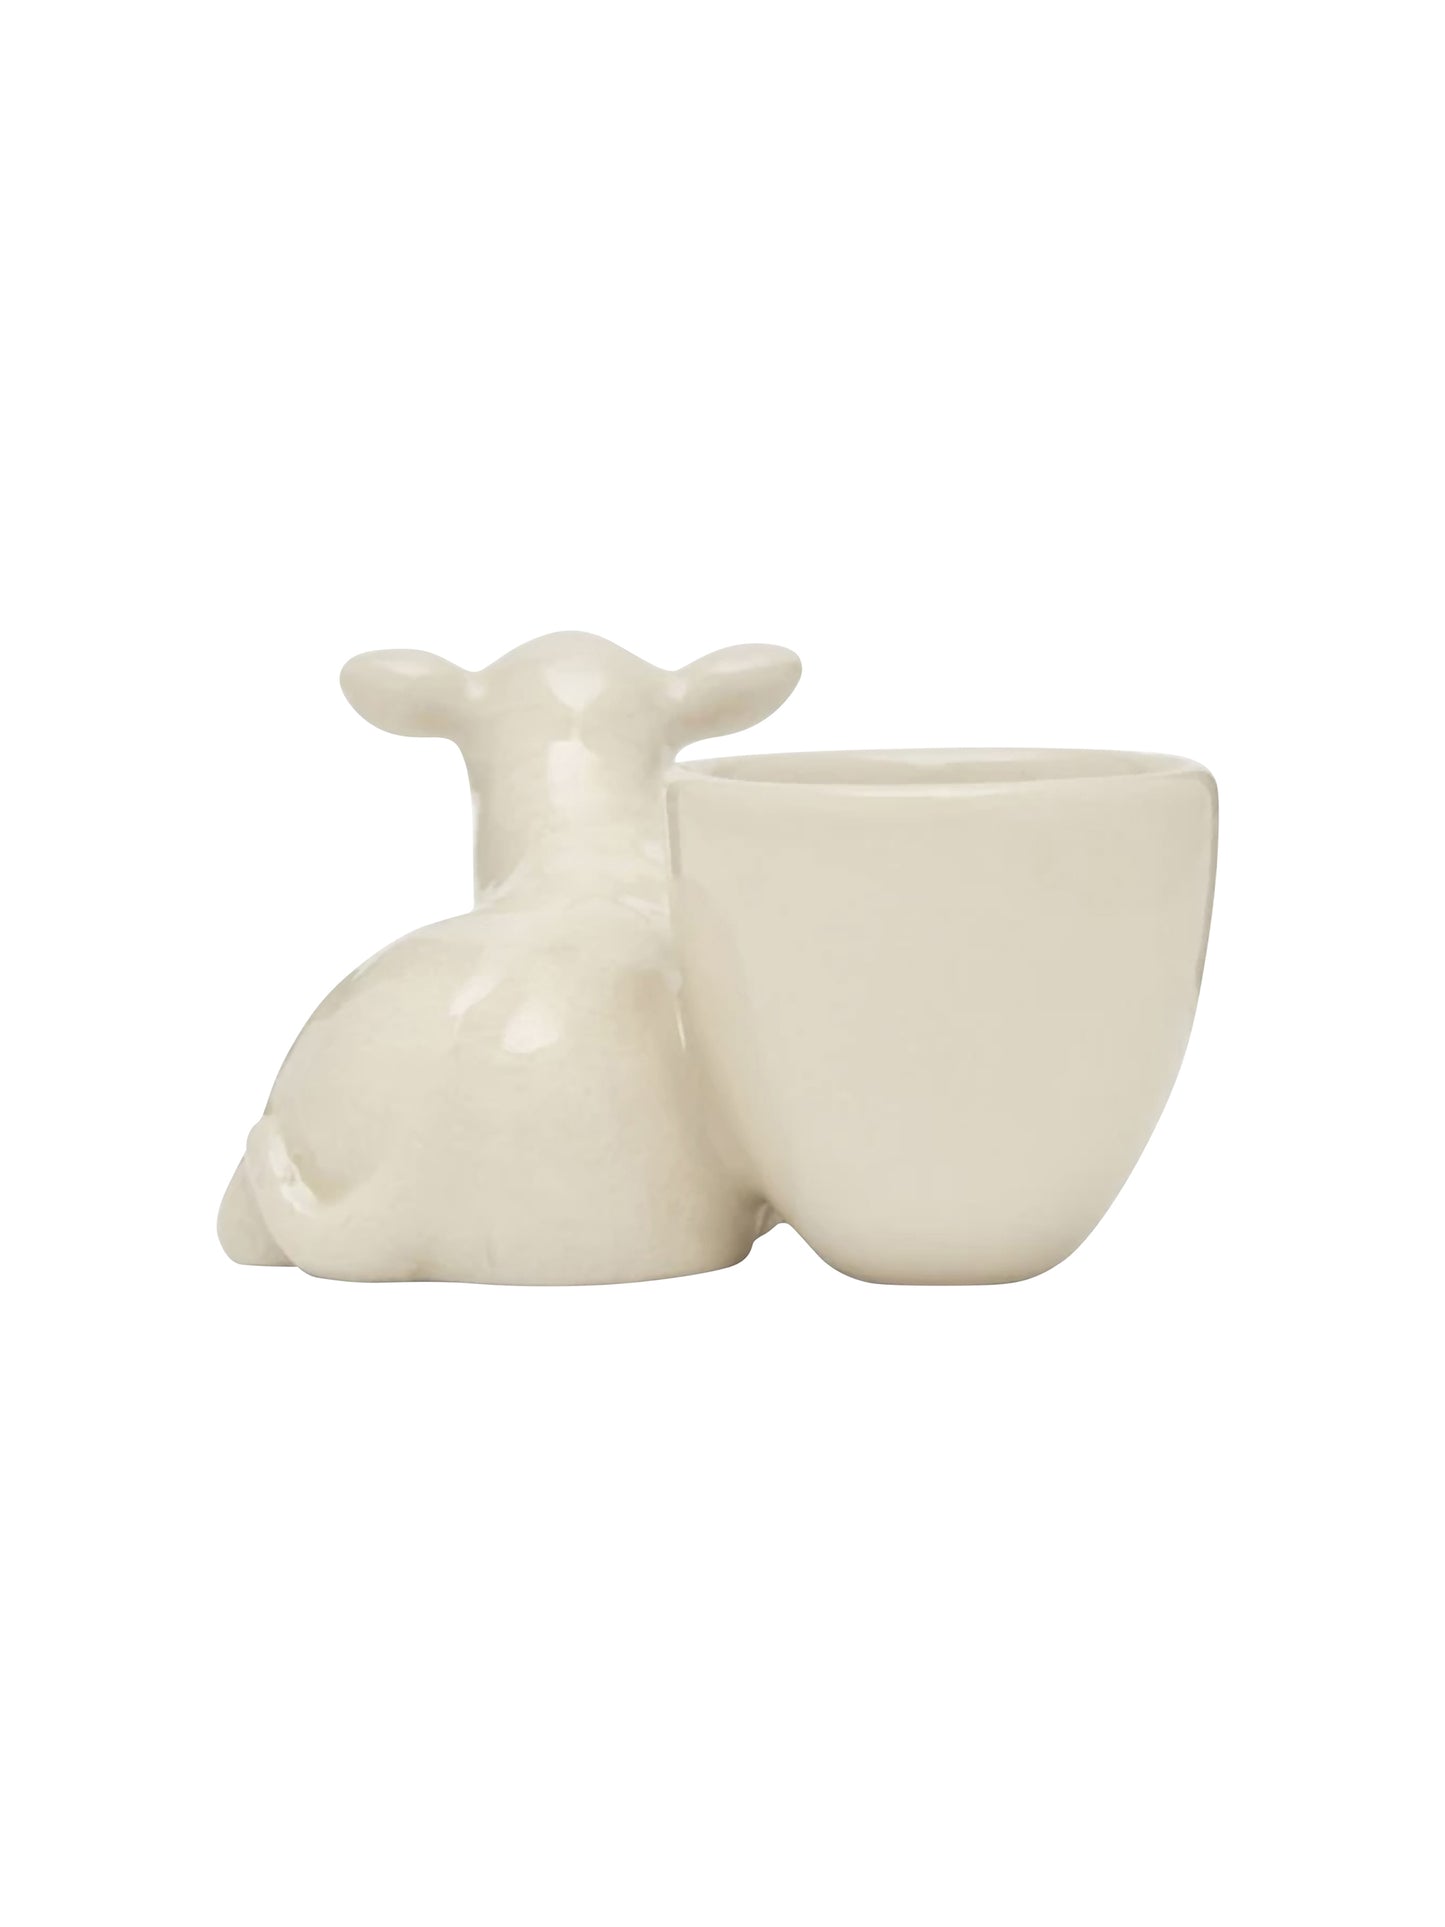 Quail Ceramics Lamb with Egg Cups Weston Table